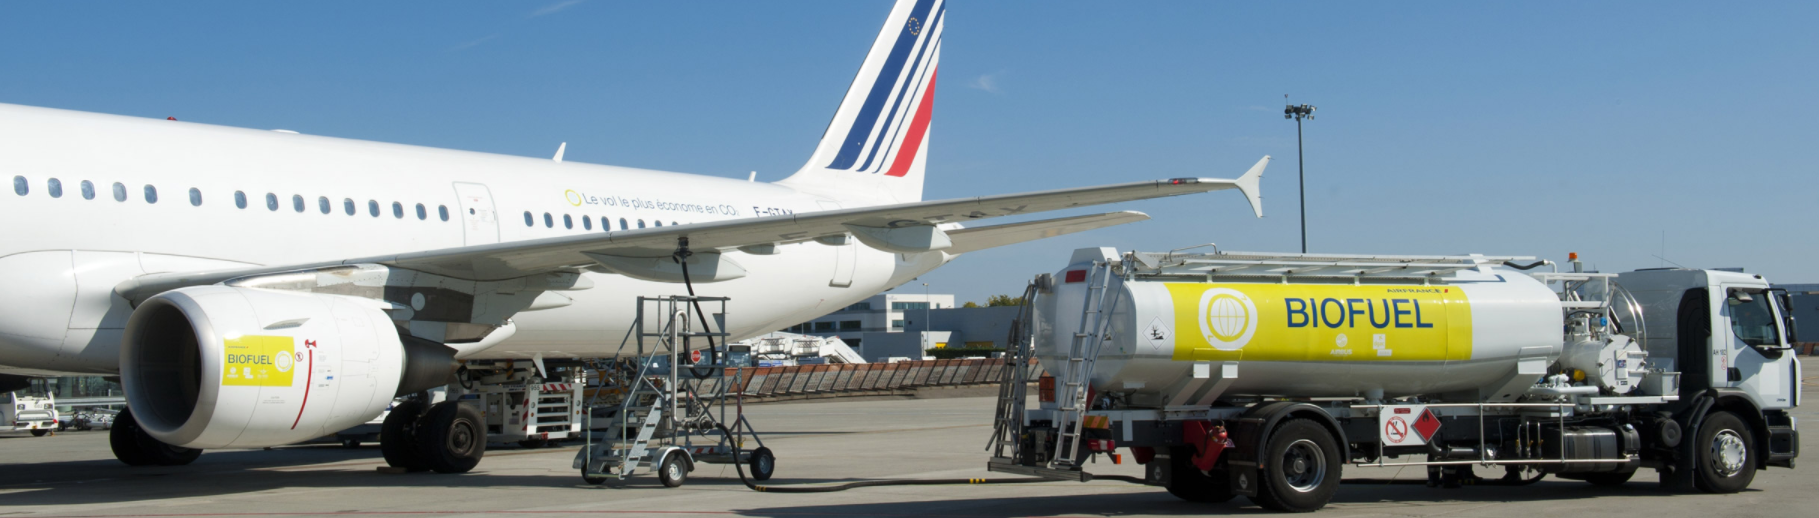 Air France-KLM biofuel